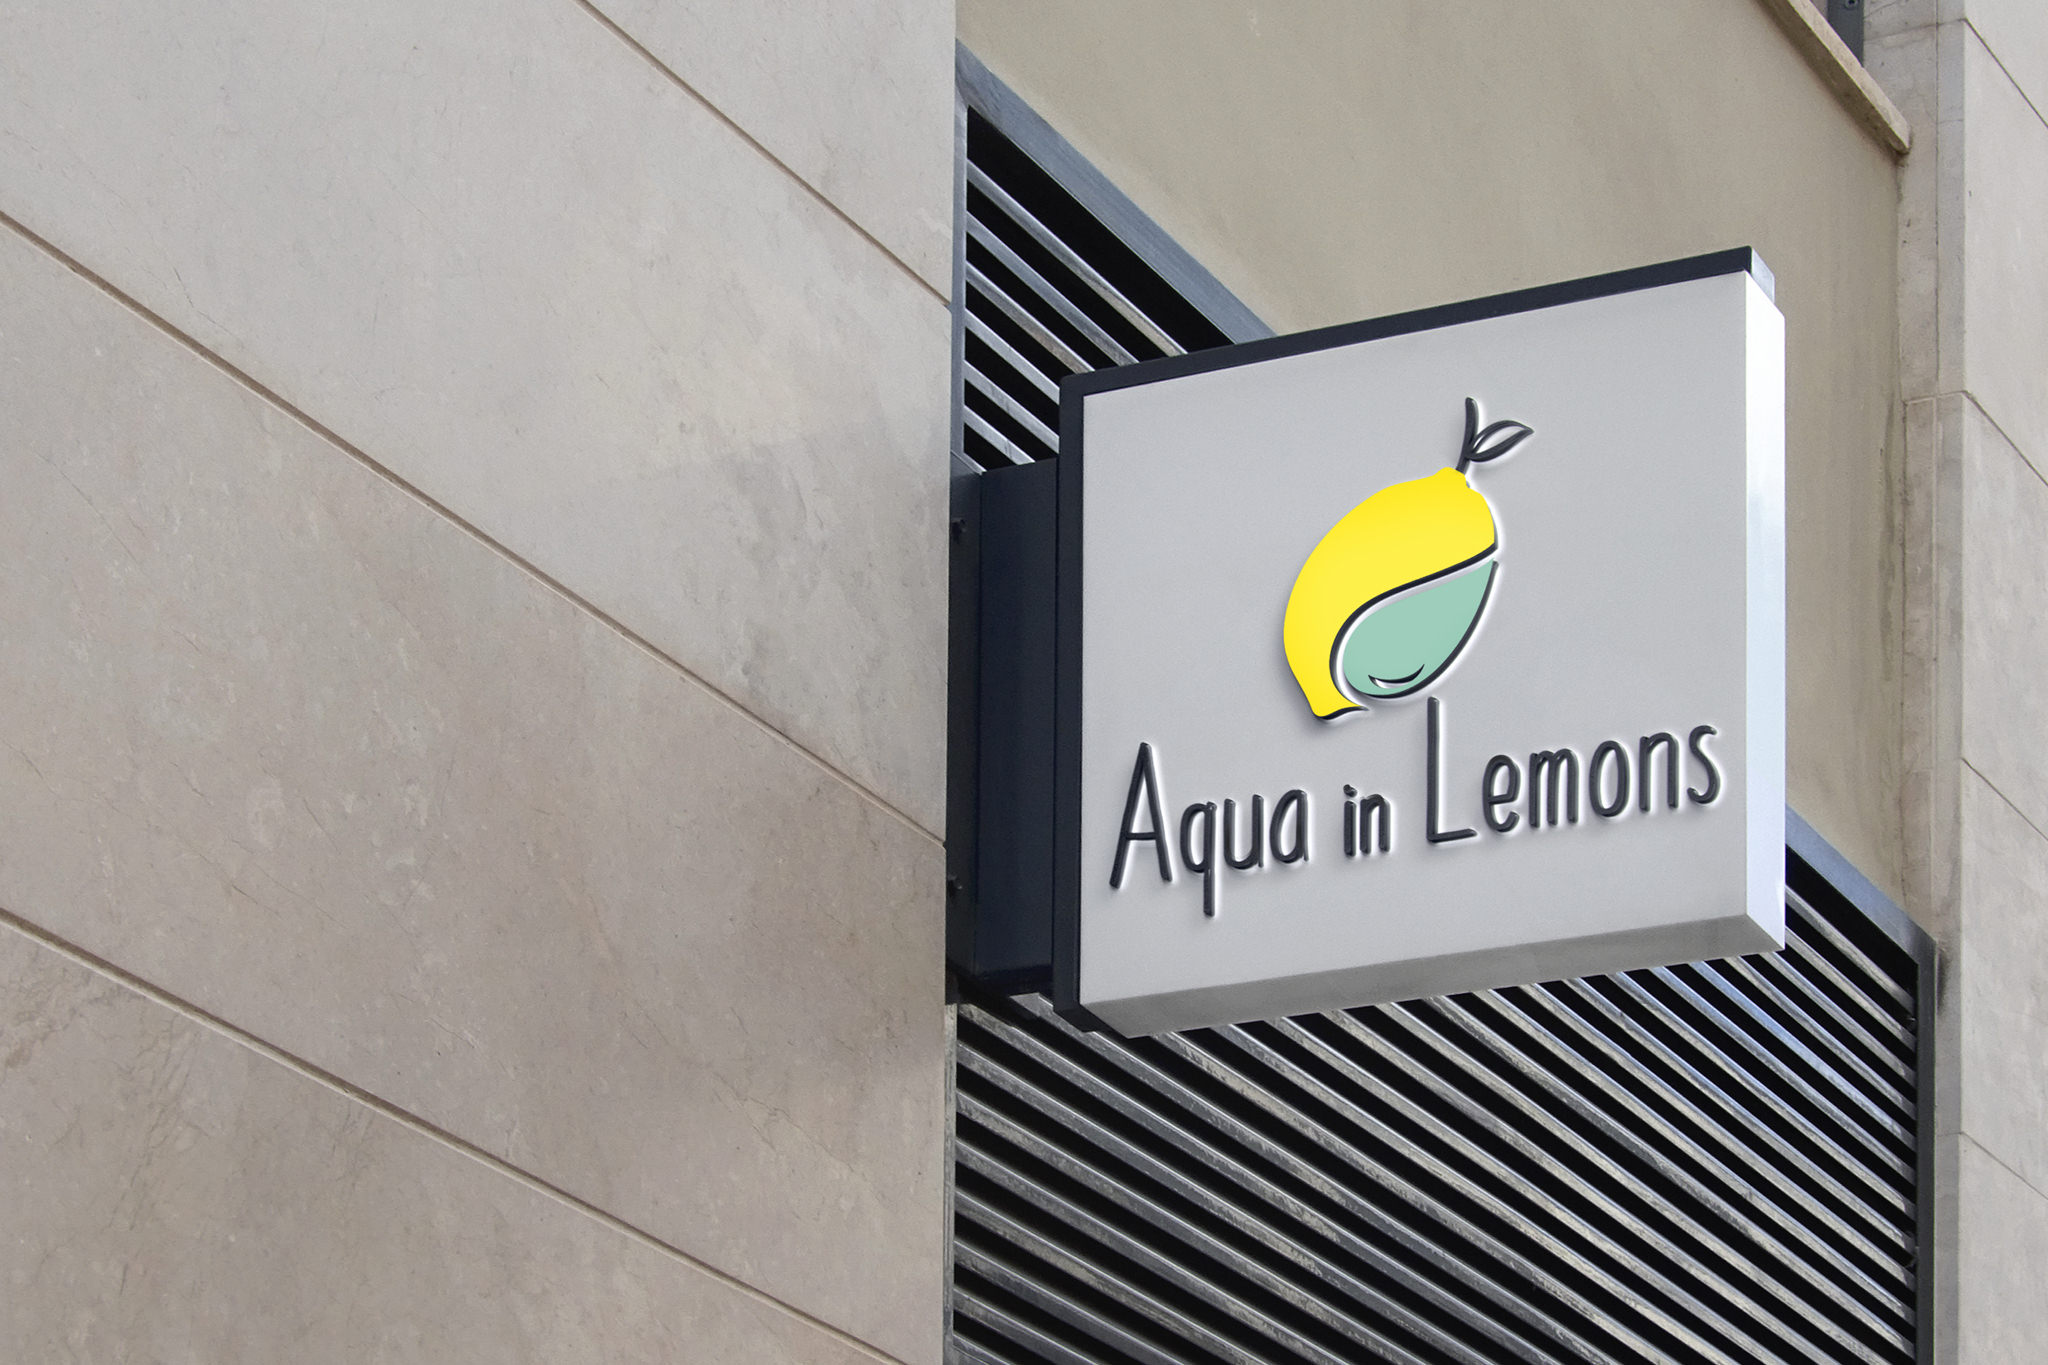 Aqua in lemons sign